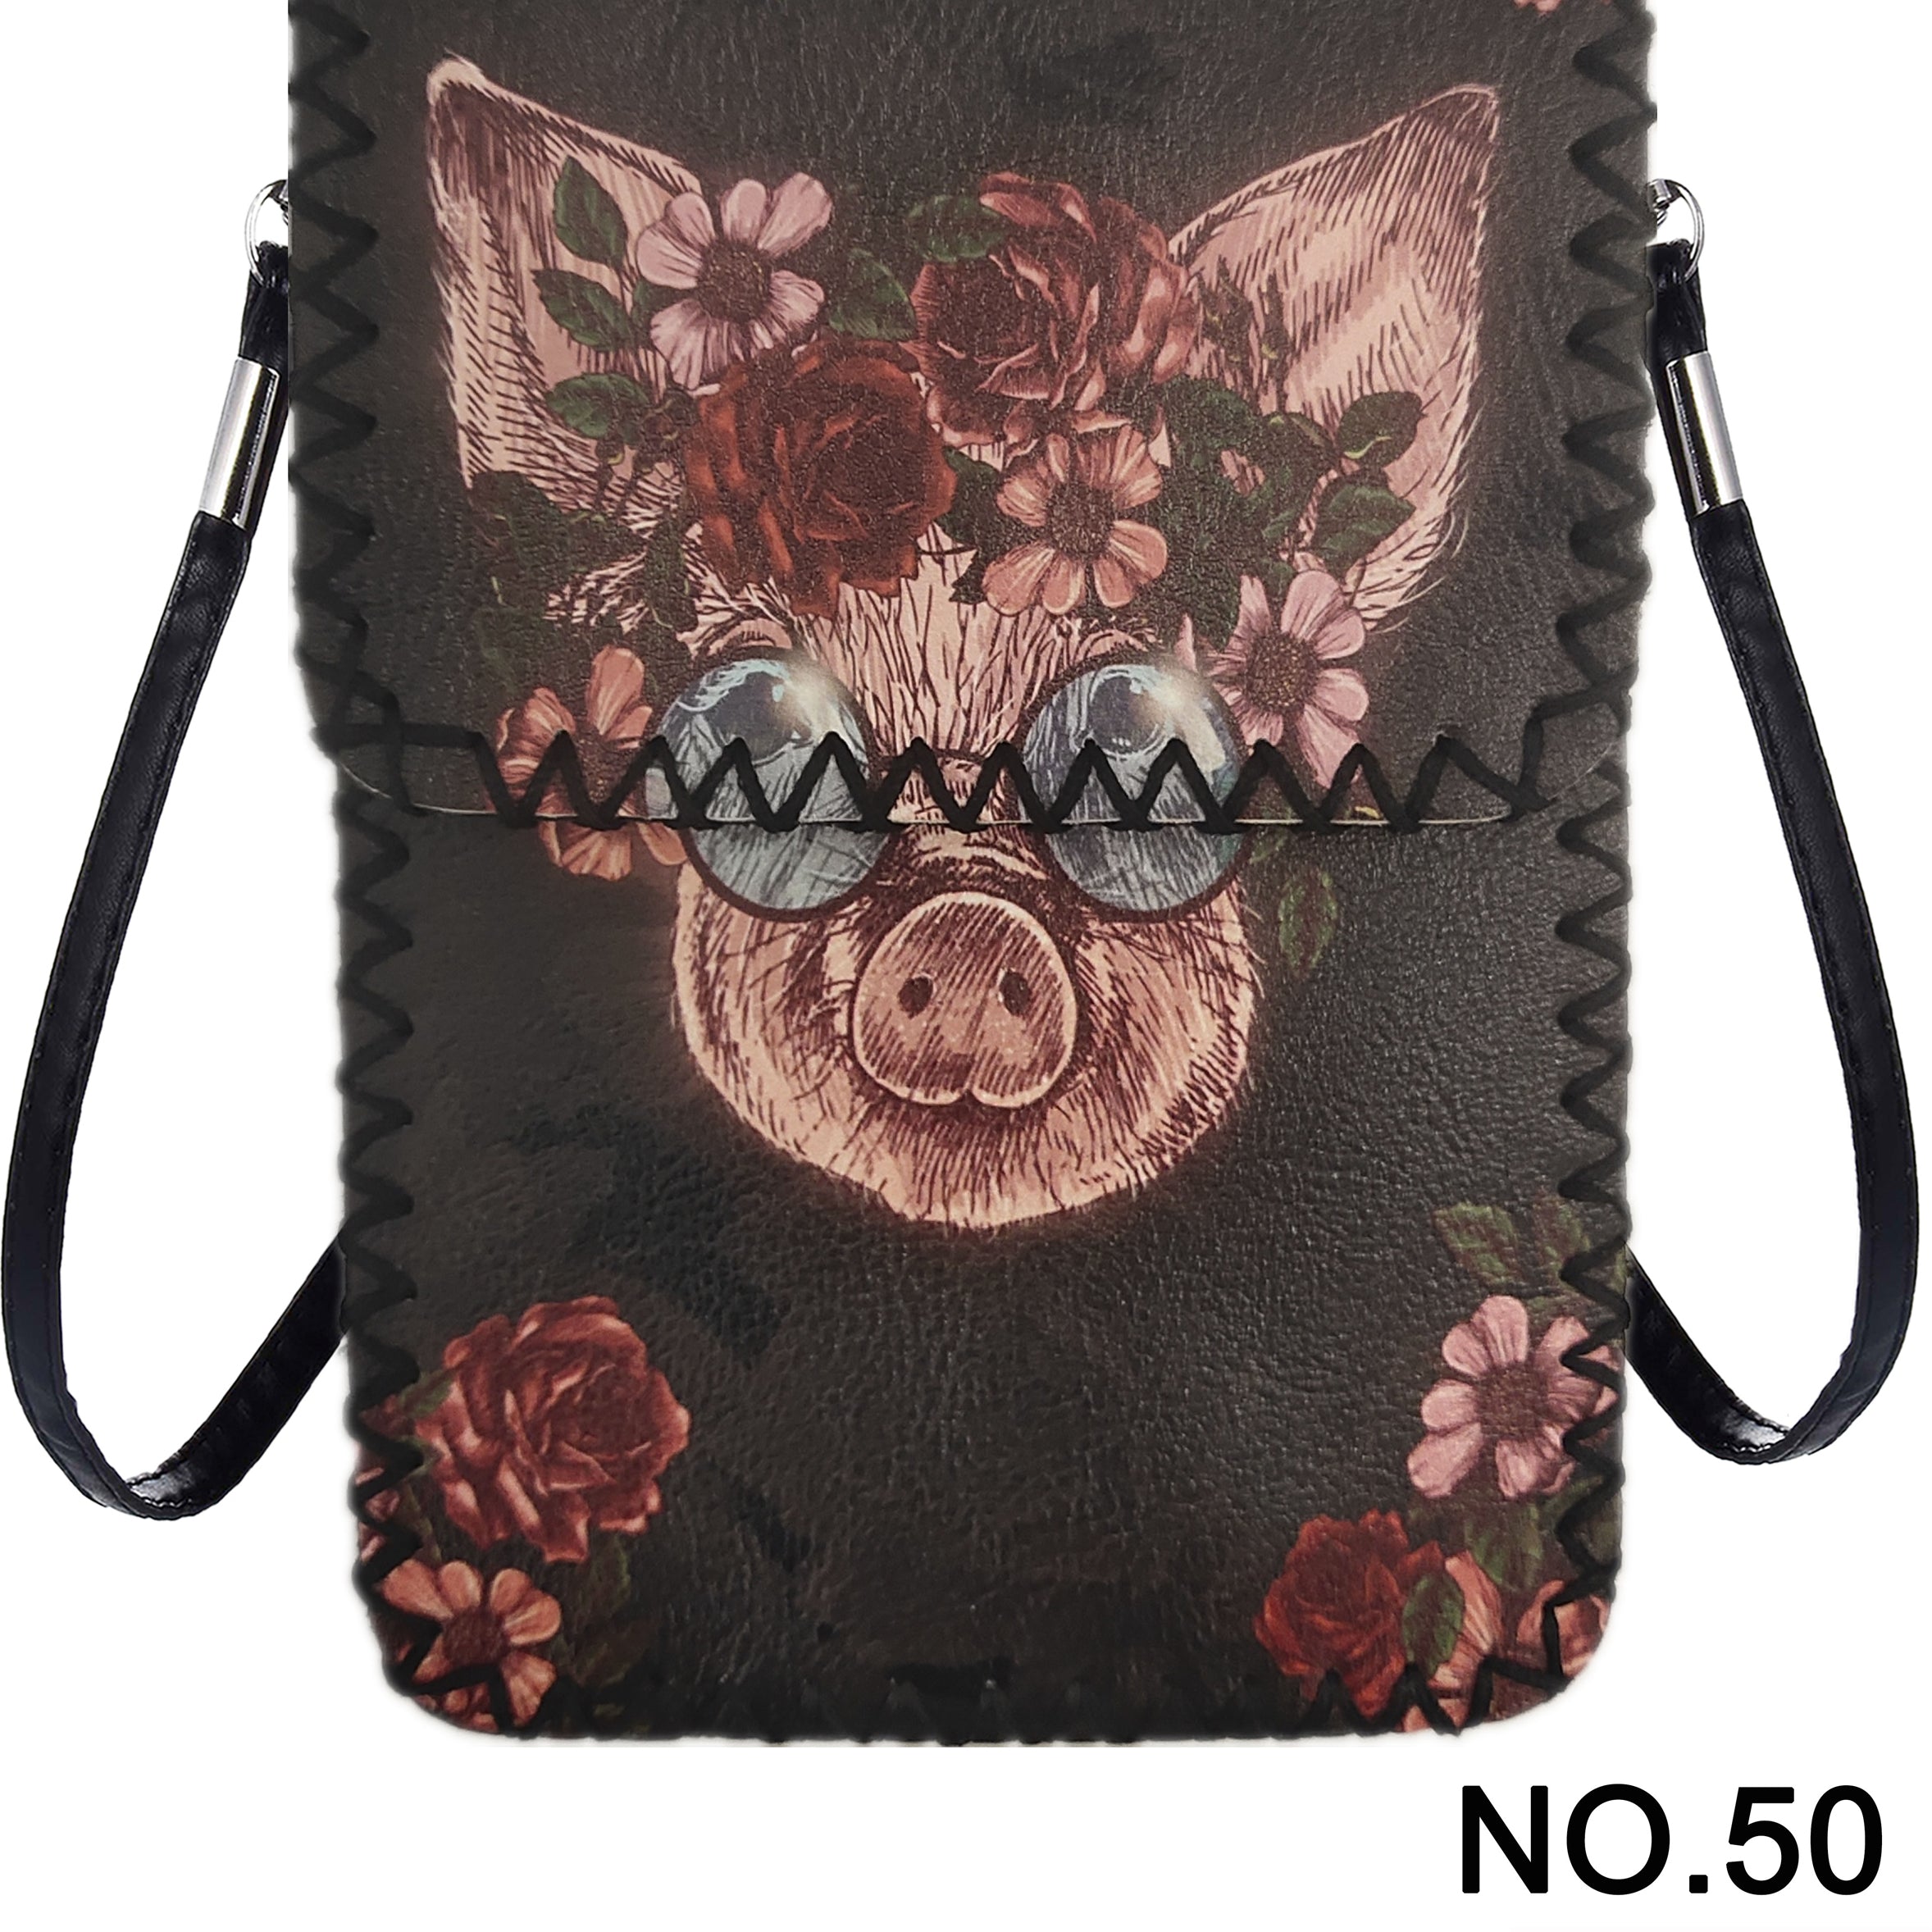 Floral Pig Printed Crossbody Bag HB0580 - No.51